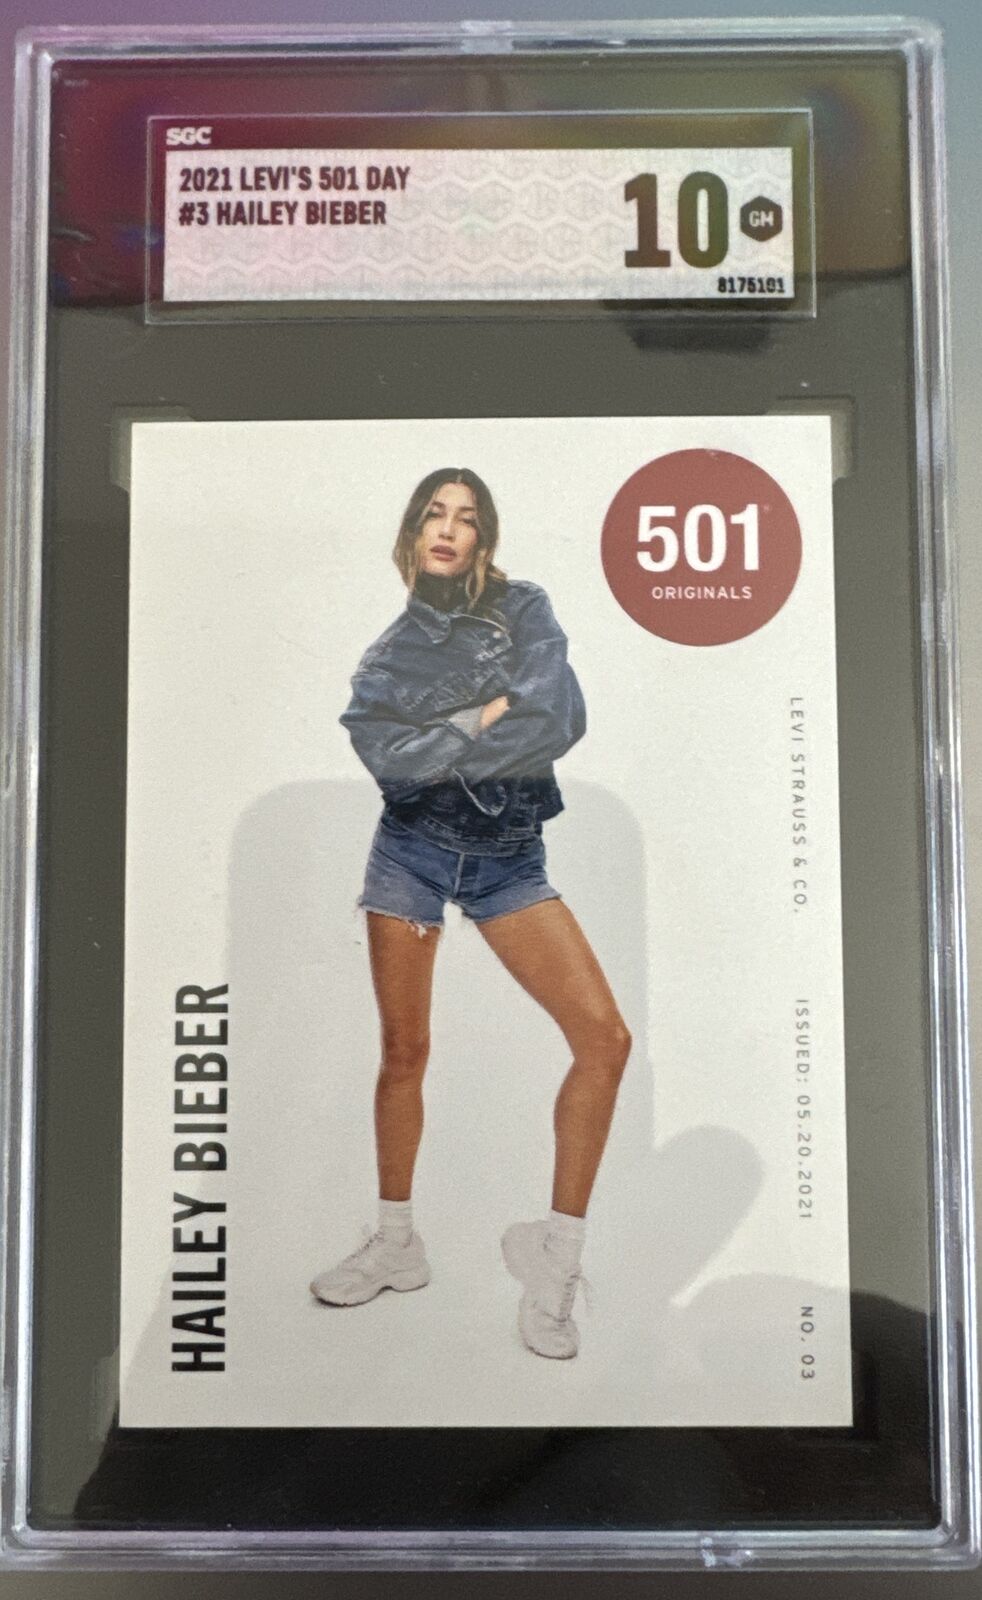 Hailey Bieber 2021 Levi’s 501 Day RC Rookie Card SGC 10 Gem Mint